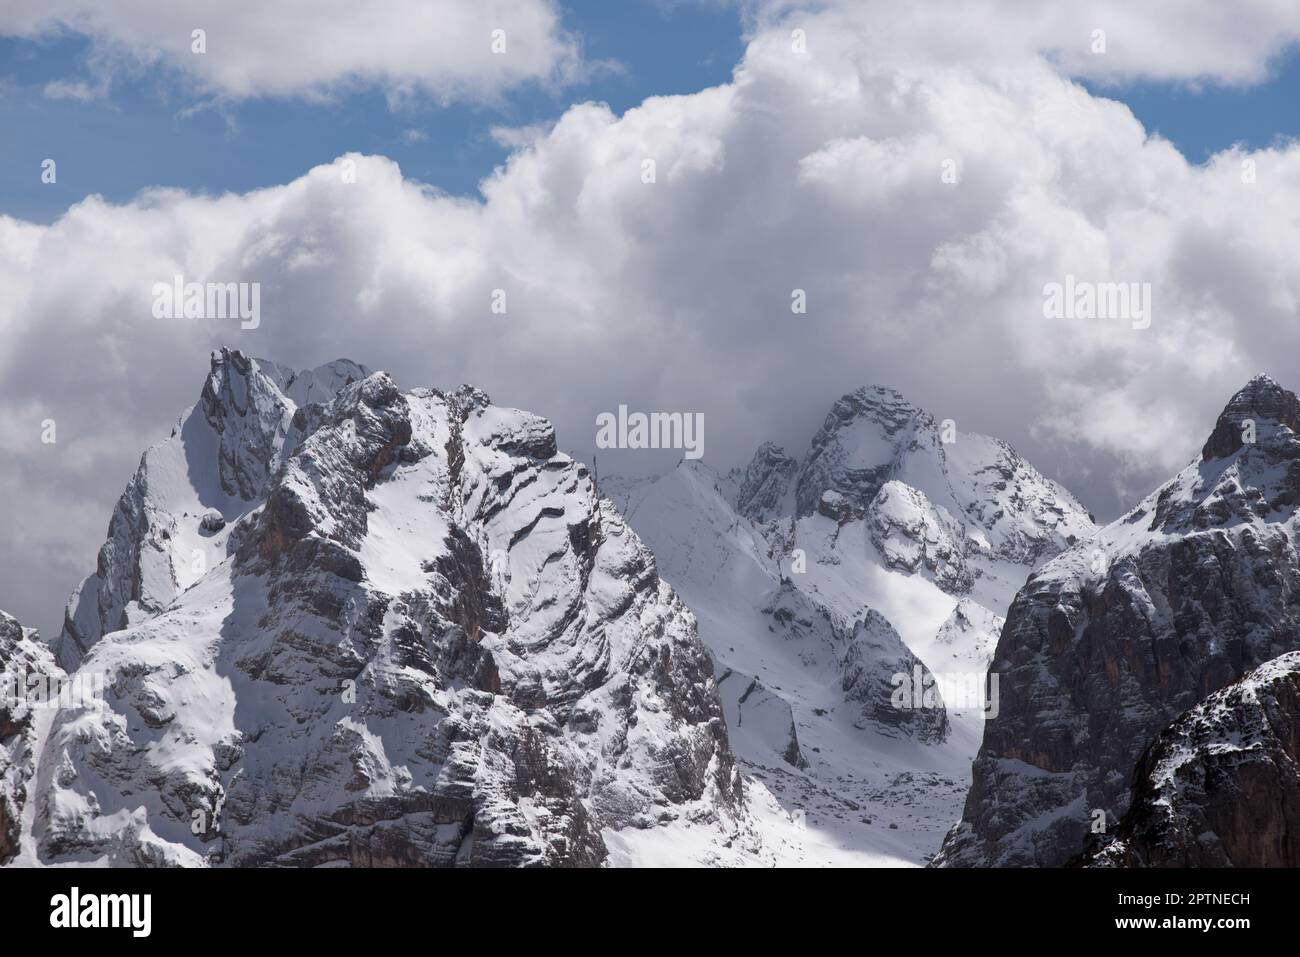 splendide panorama montuoso delle dolomiti, le montagne innevate delle dolomiti. Banque D'Images